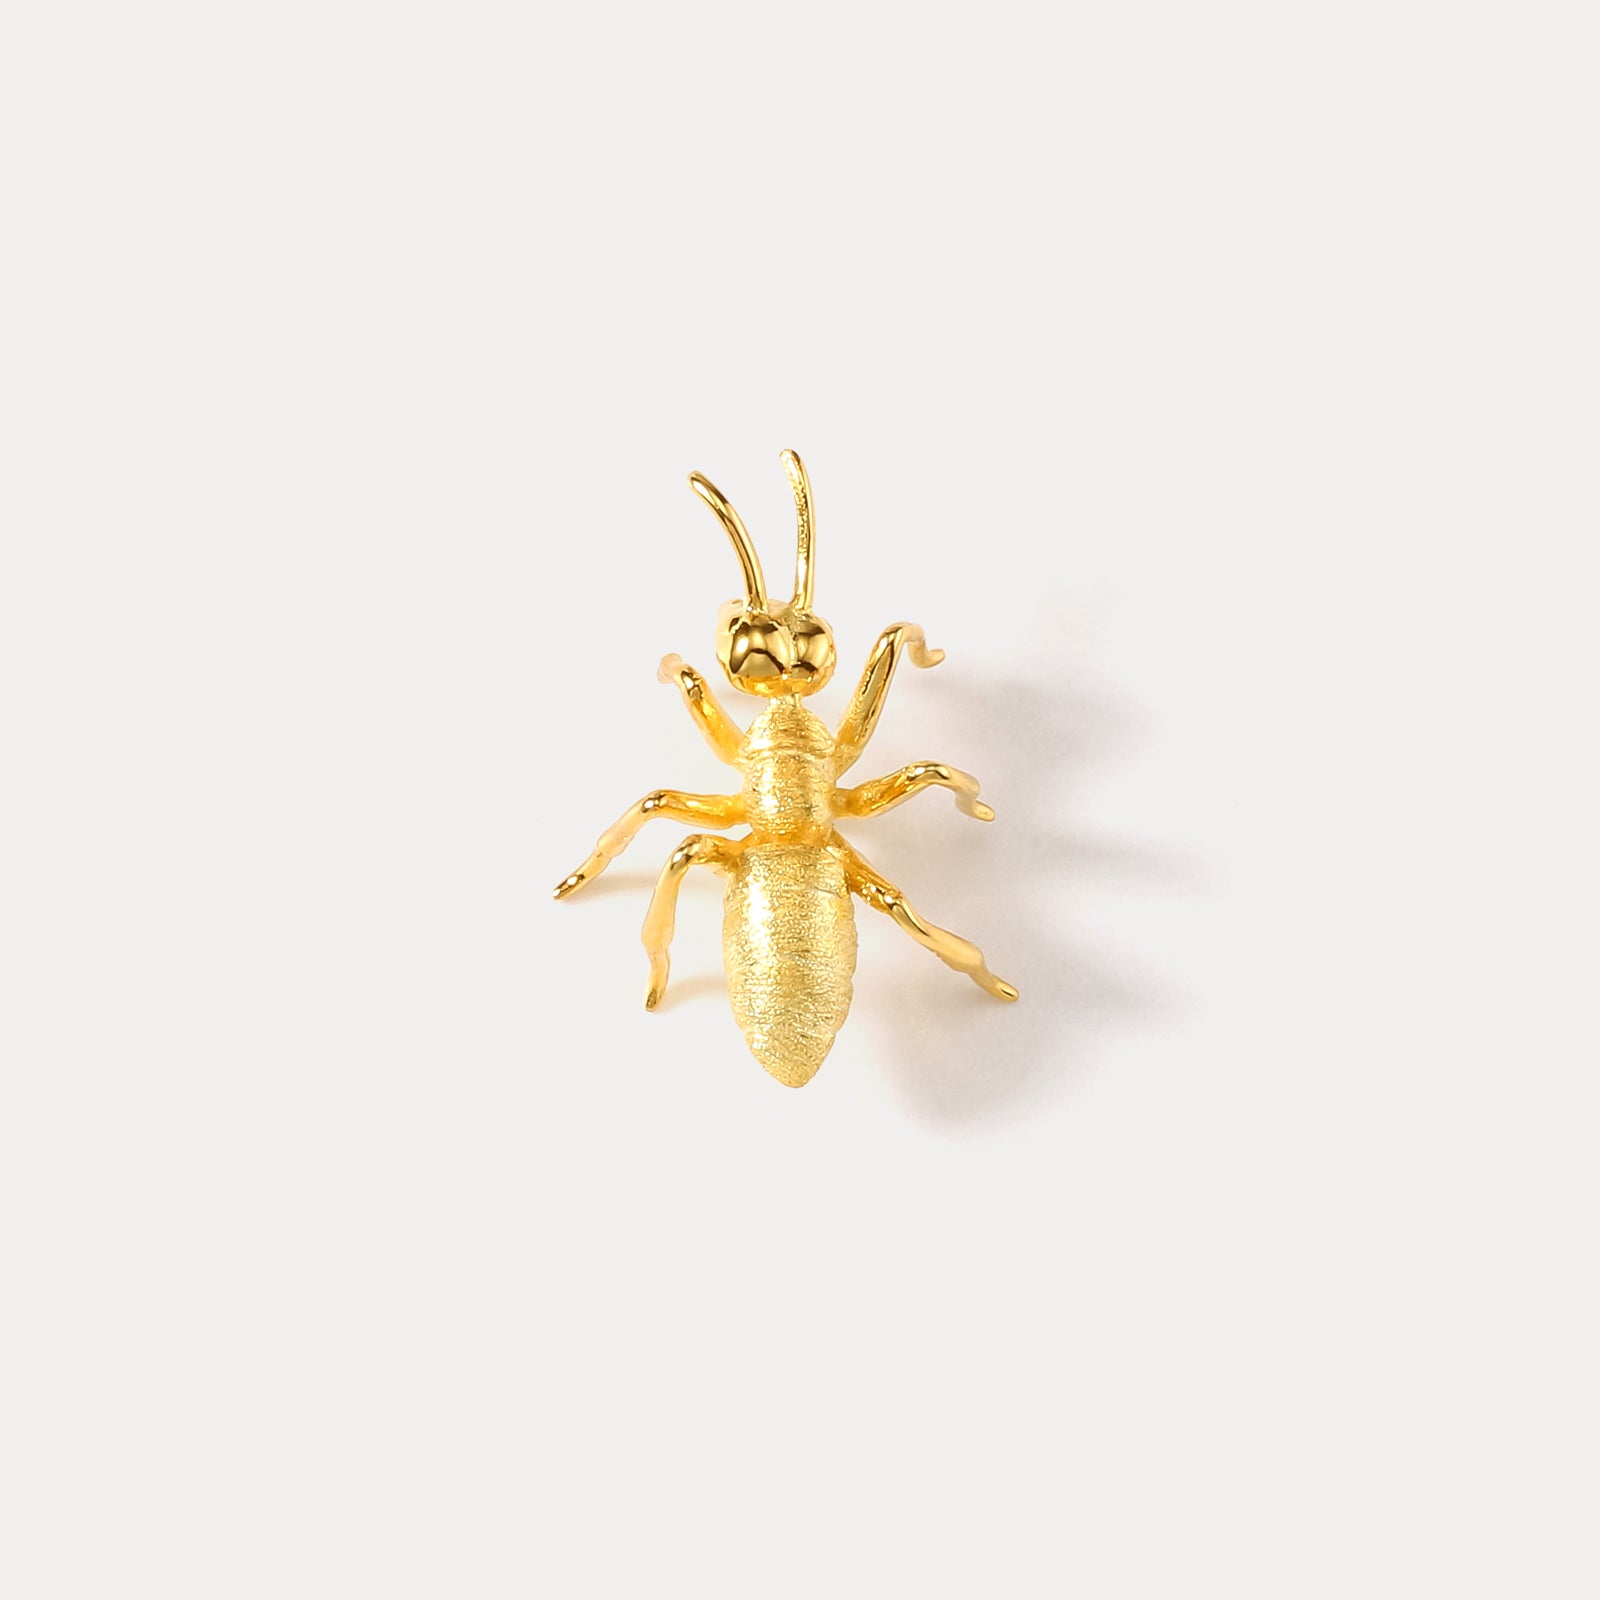 Selenichast Gold Ant Brooch